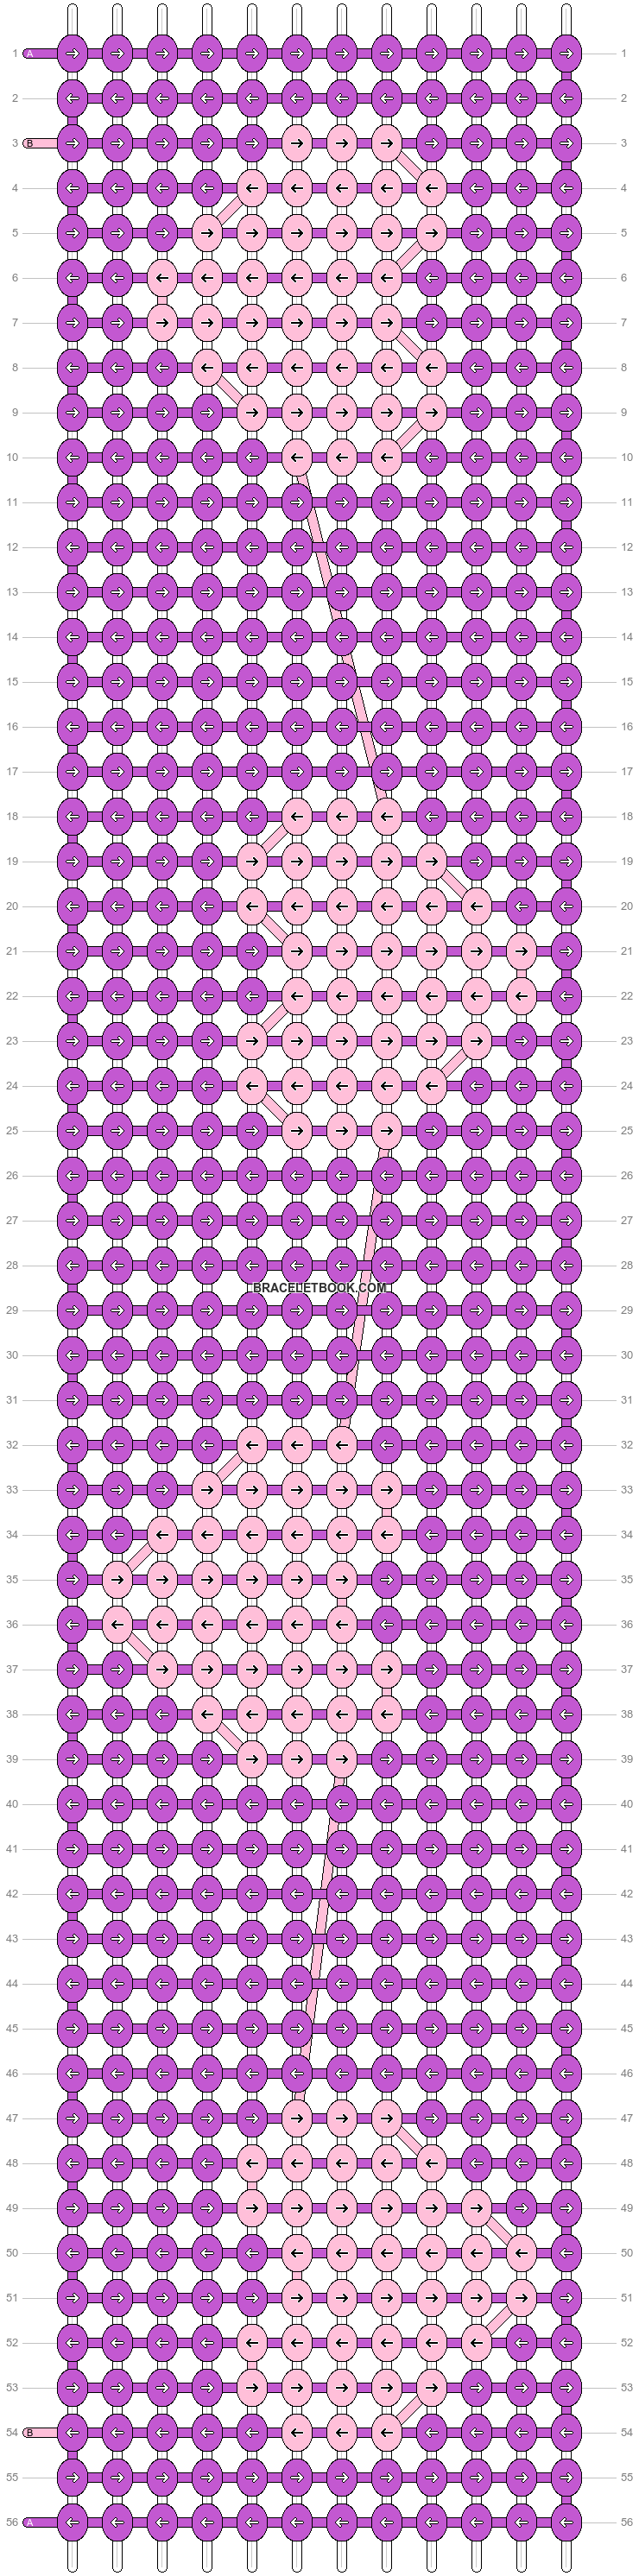 Alpha pattern #21851 variation #39445 pattern